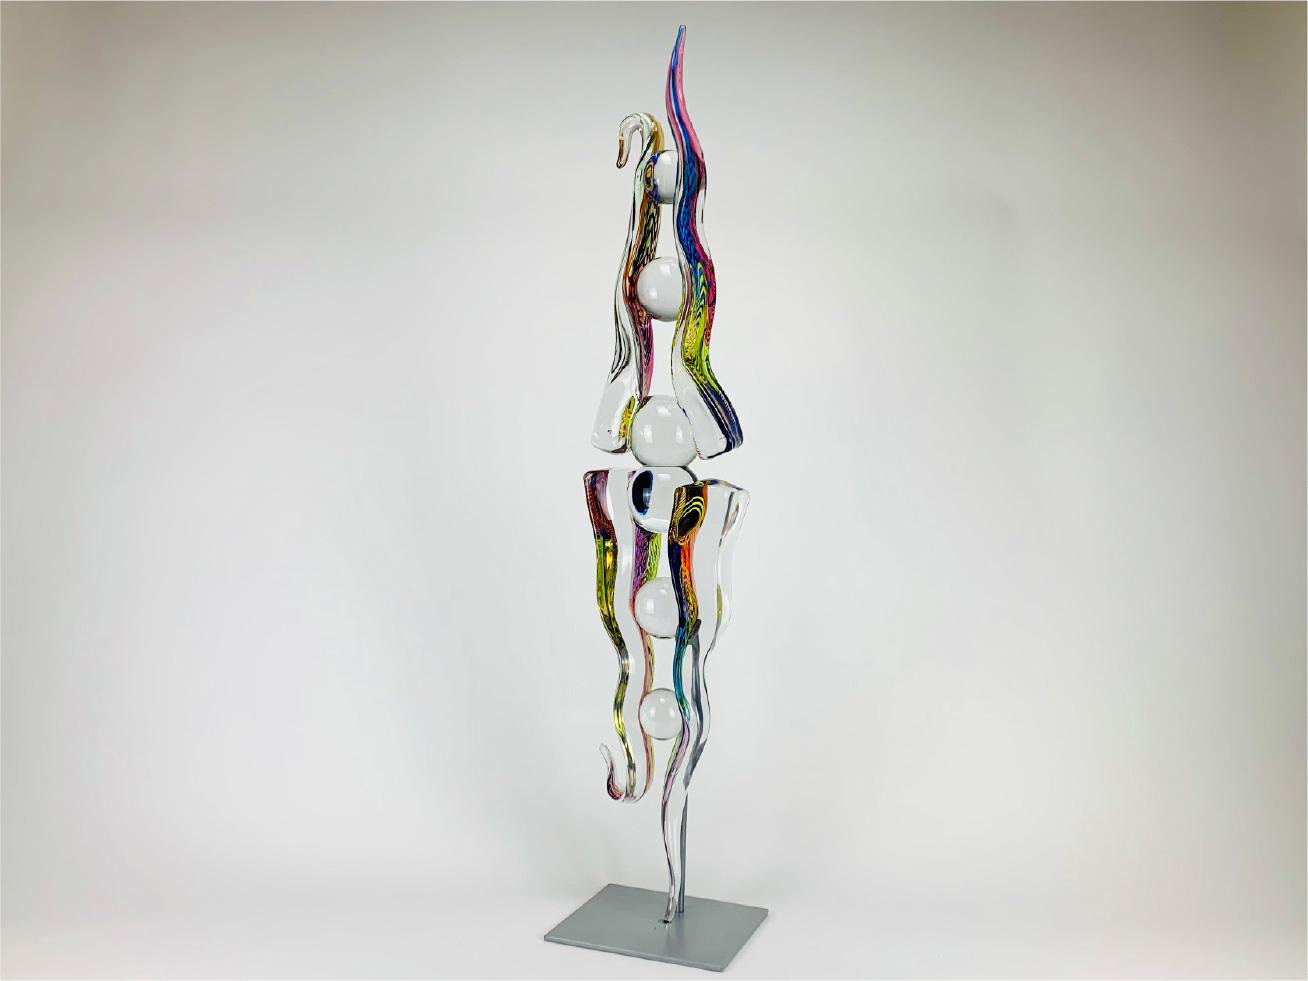 richard-royal-aperture-series-a07-06-yellow-red-blue-hot-glass-sculpture